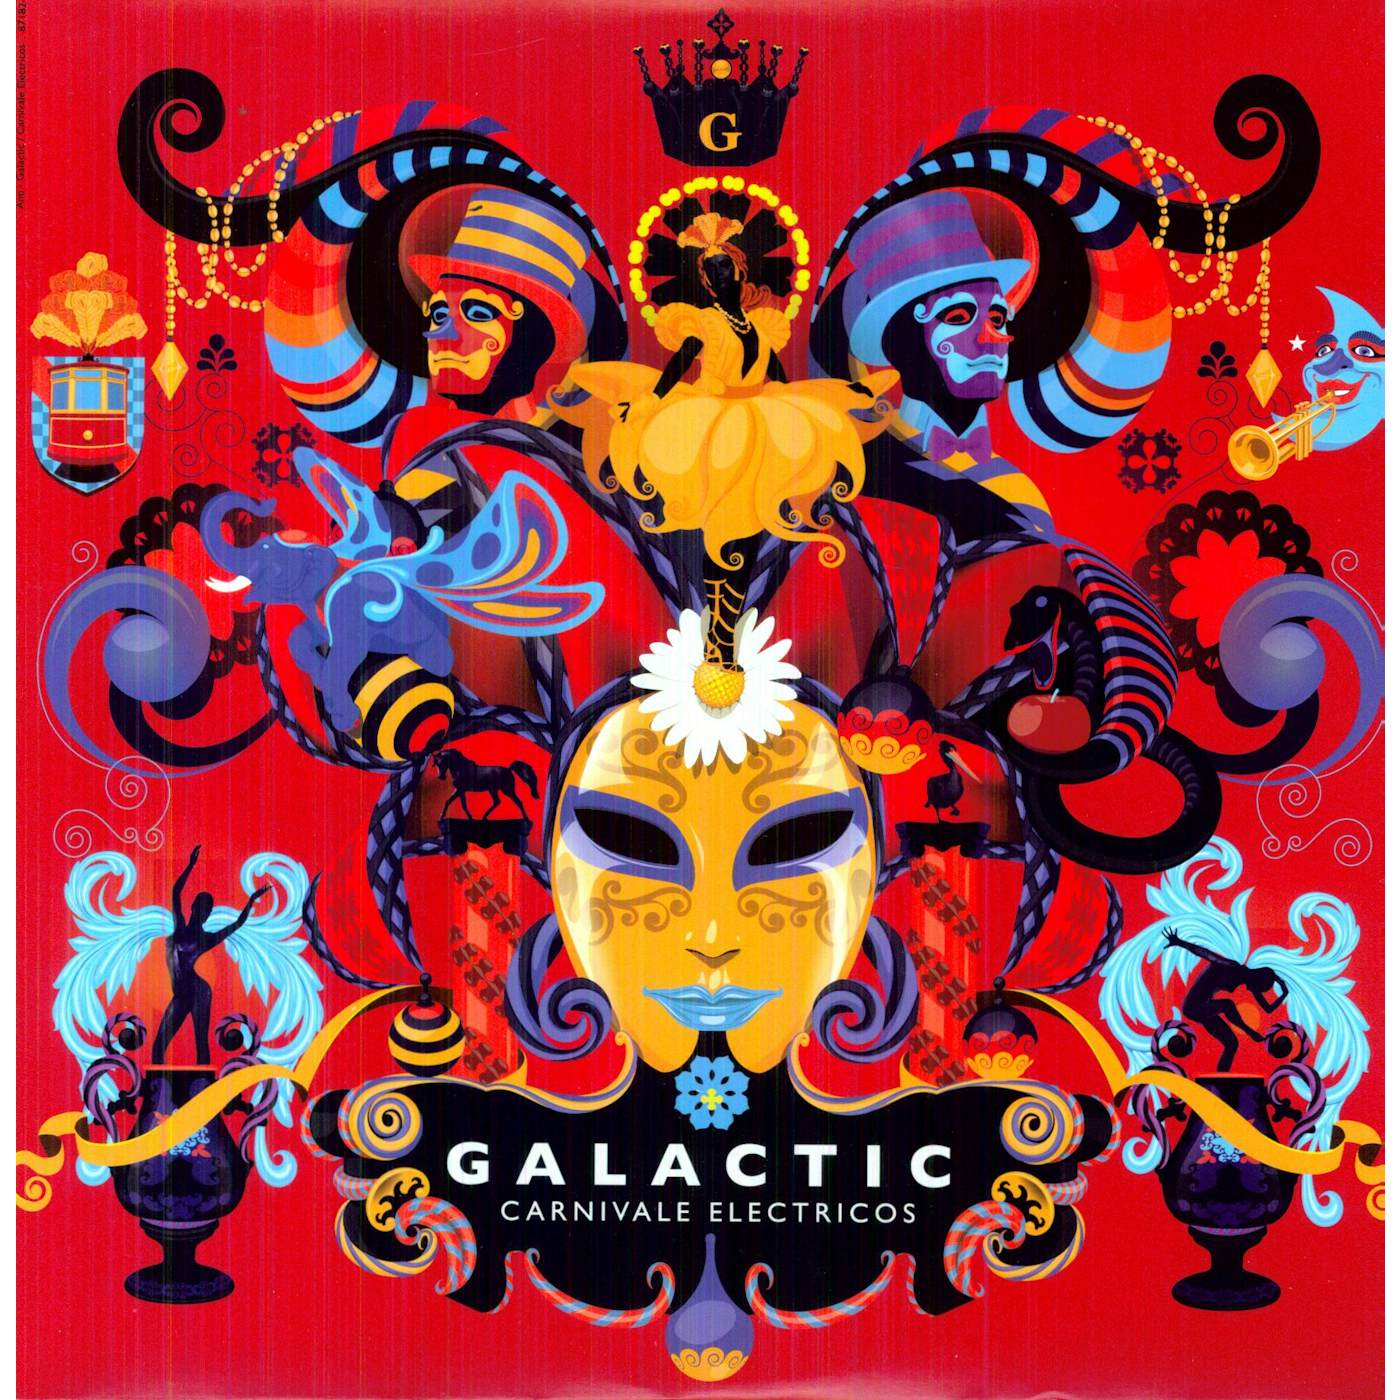 Galactic Carnivale Electricos Vinyl Record